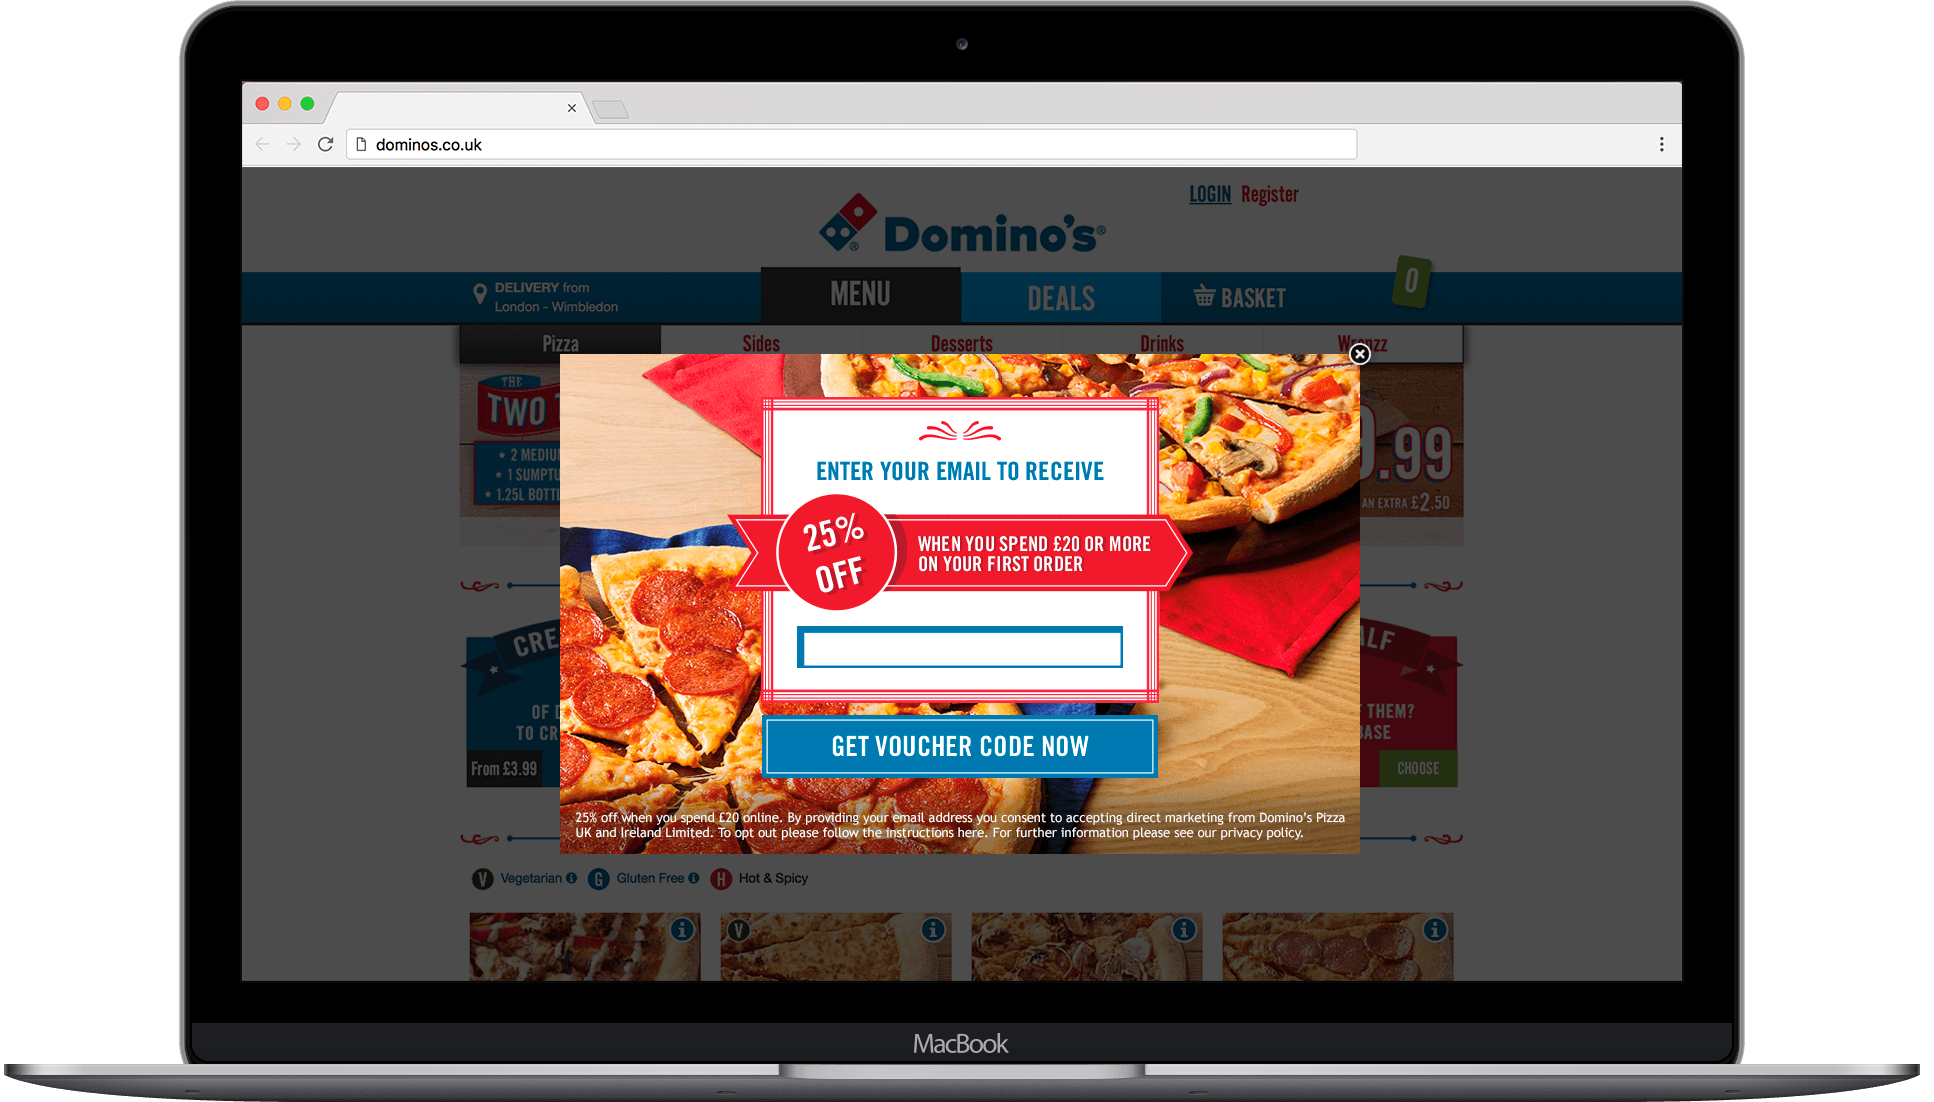 Dominos' Pizza case study